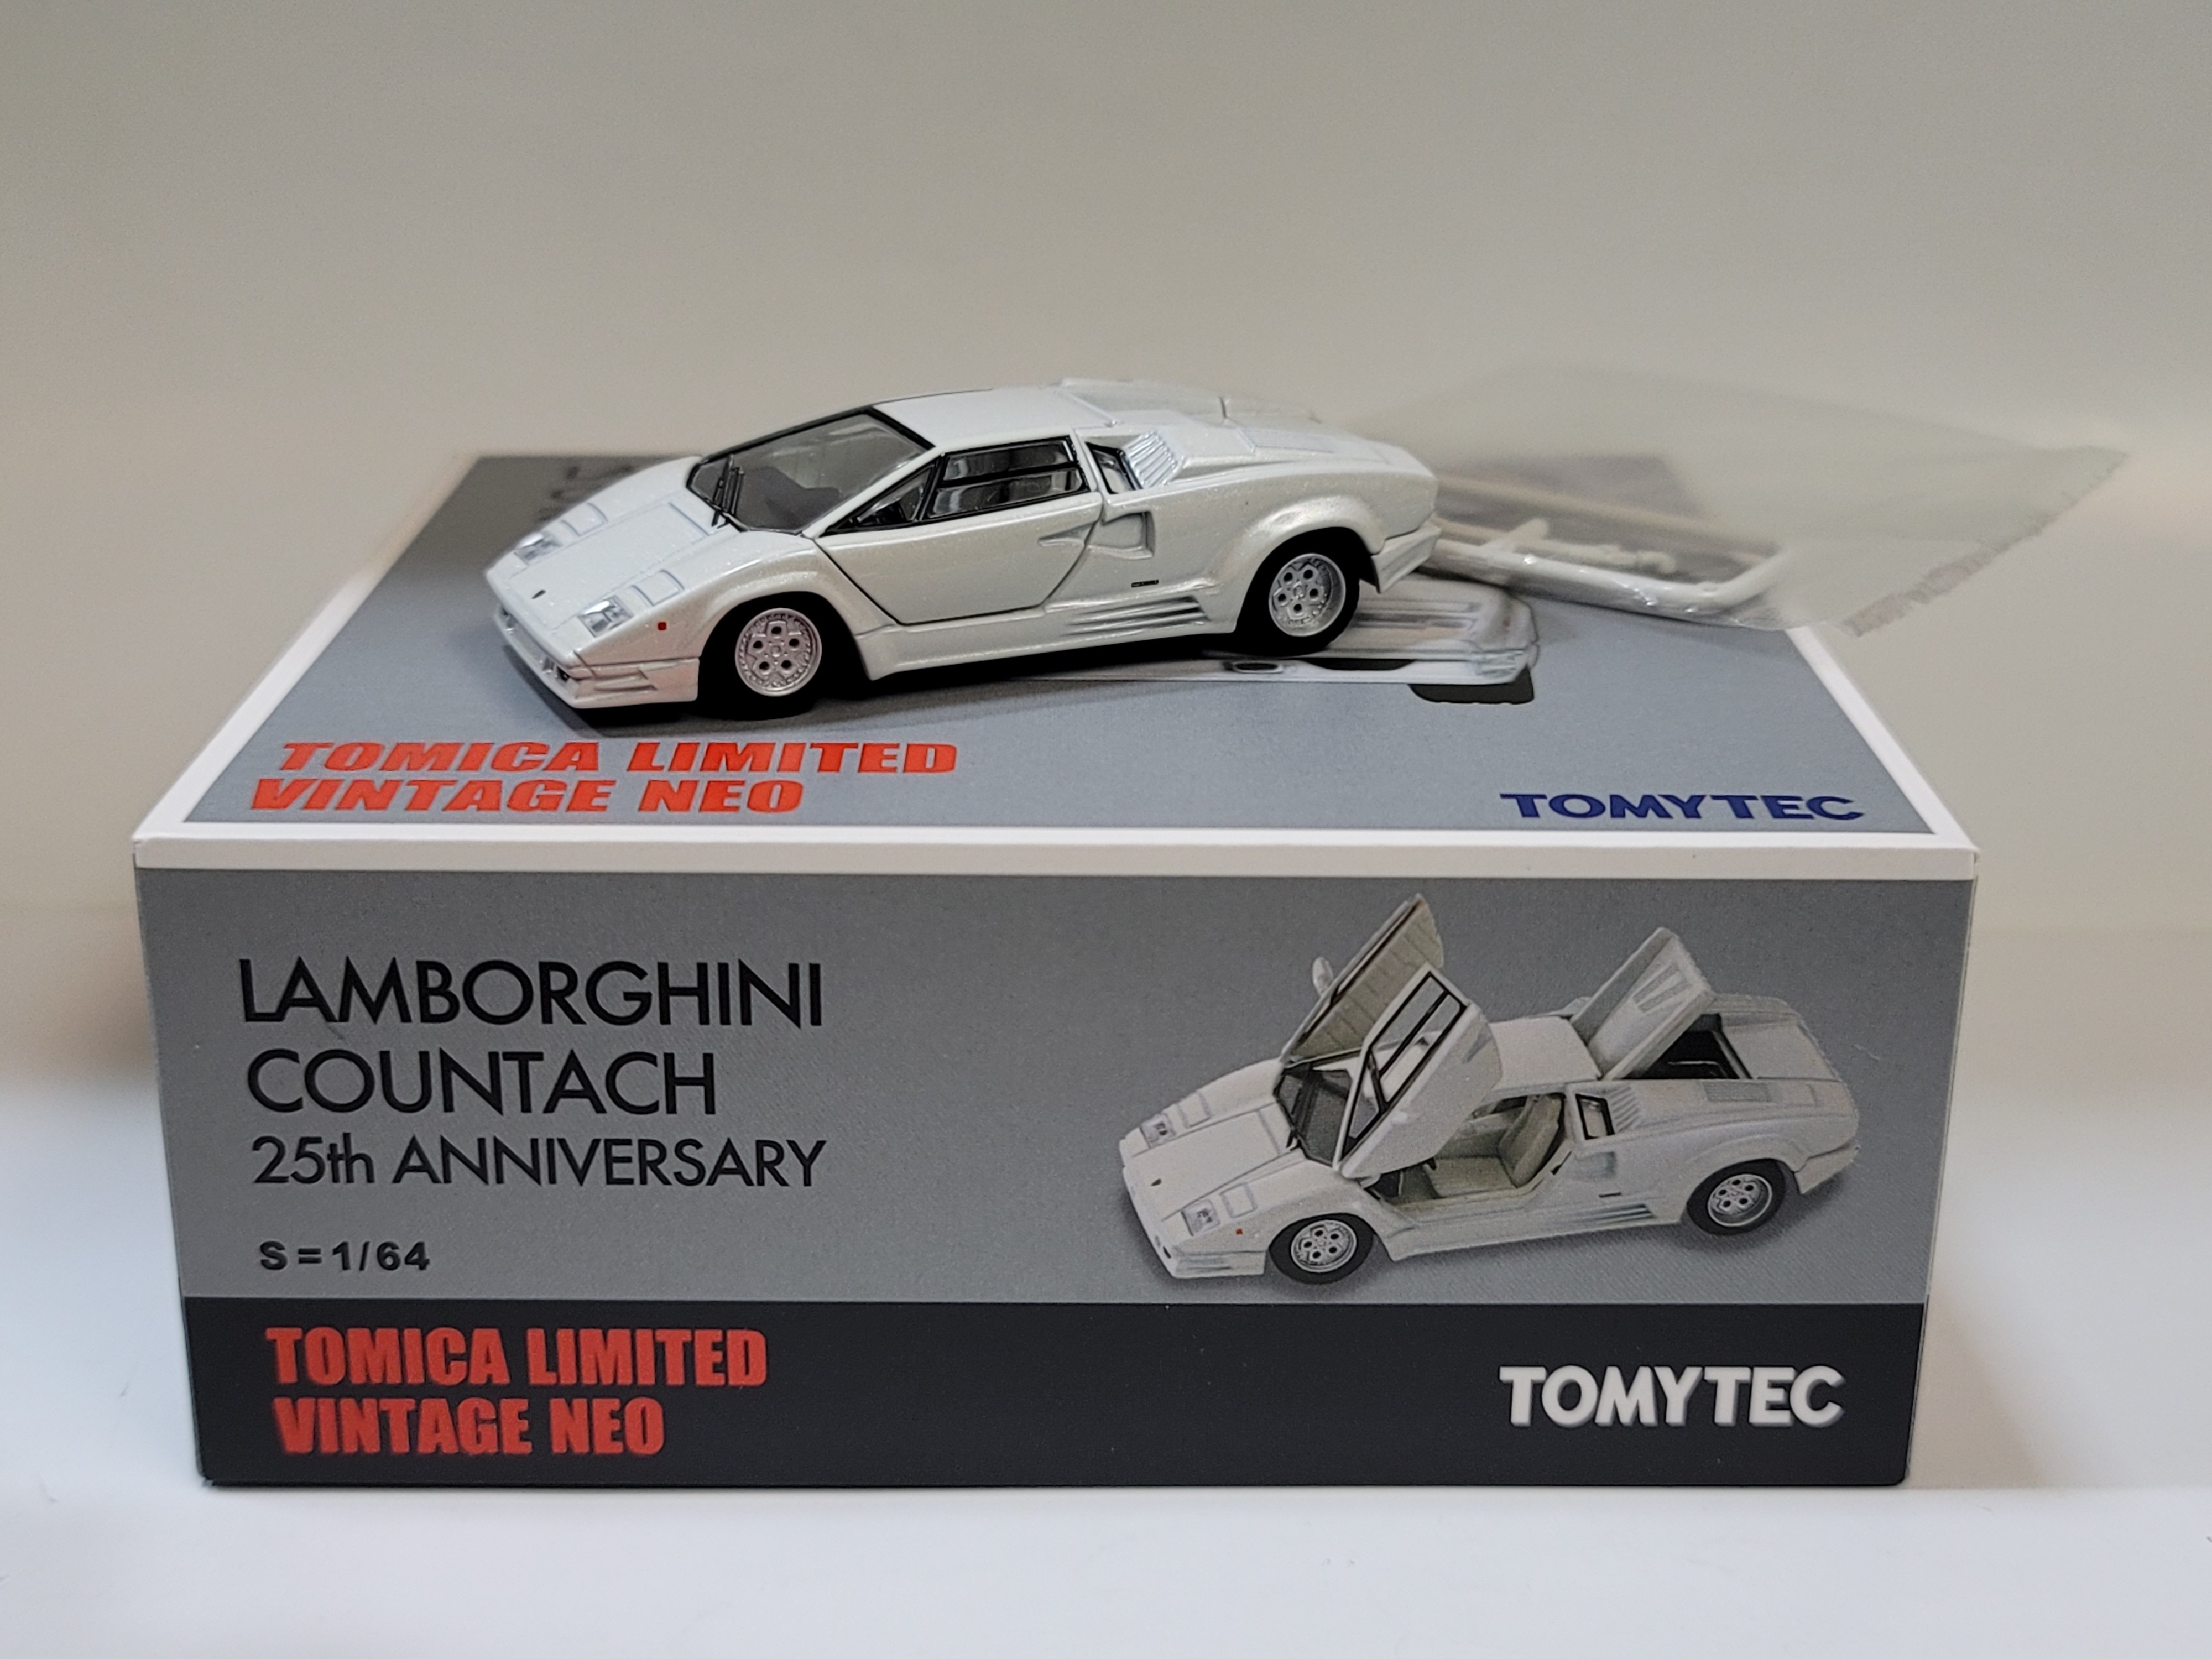 Tomytec 1/64 LV-N Lamborghini Countach 25th Anniversary